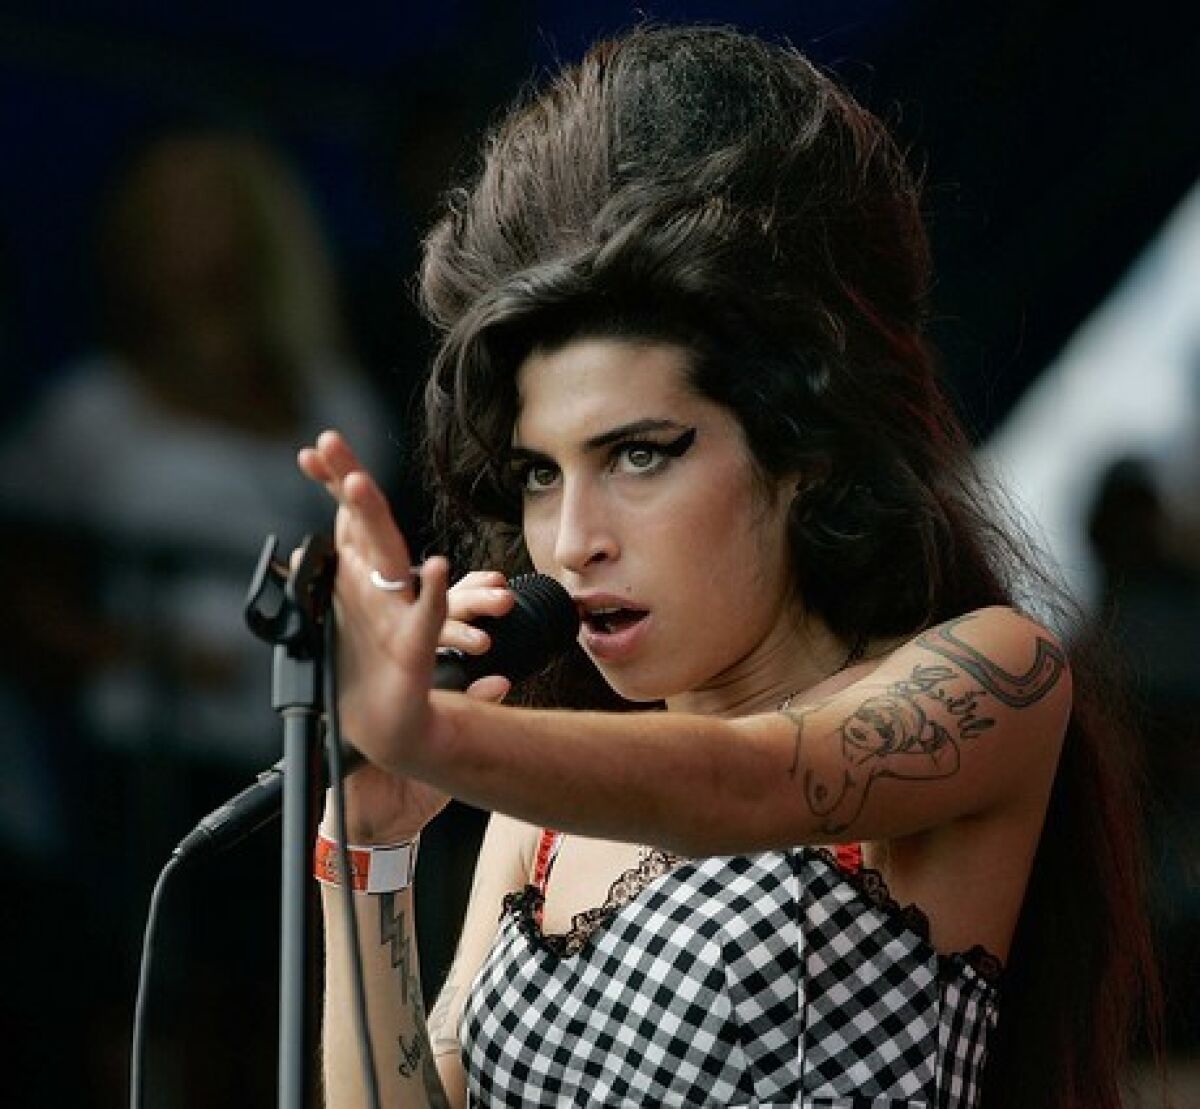 Amy Winehouse, British soul singer